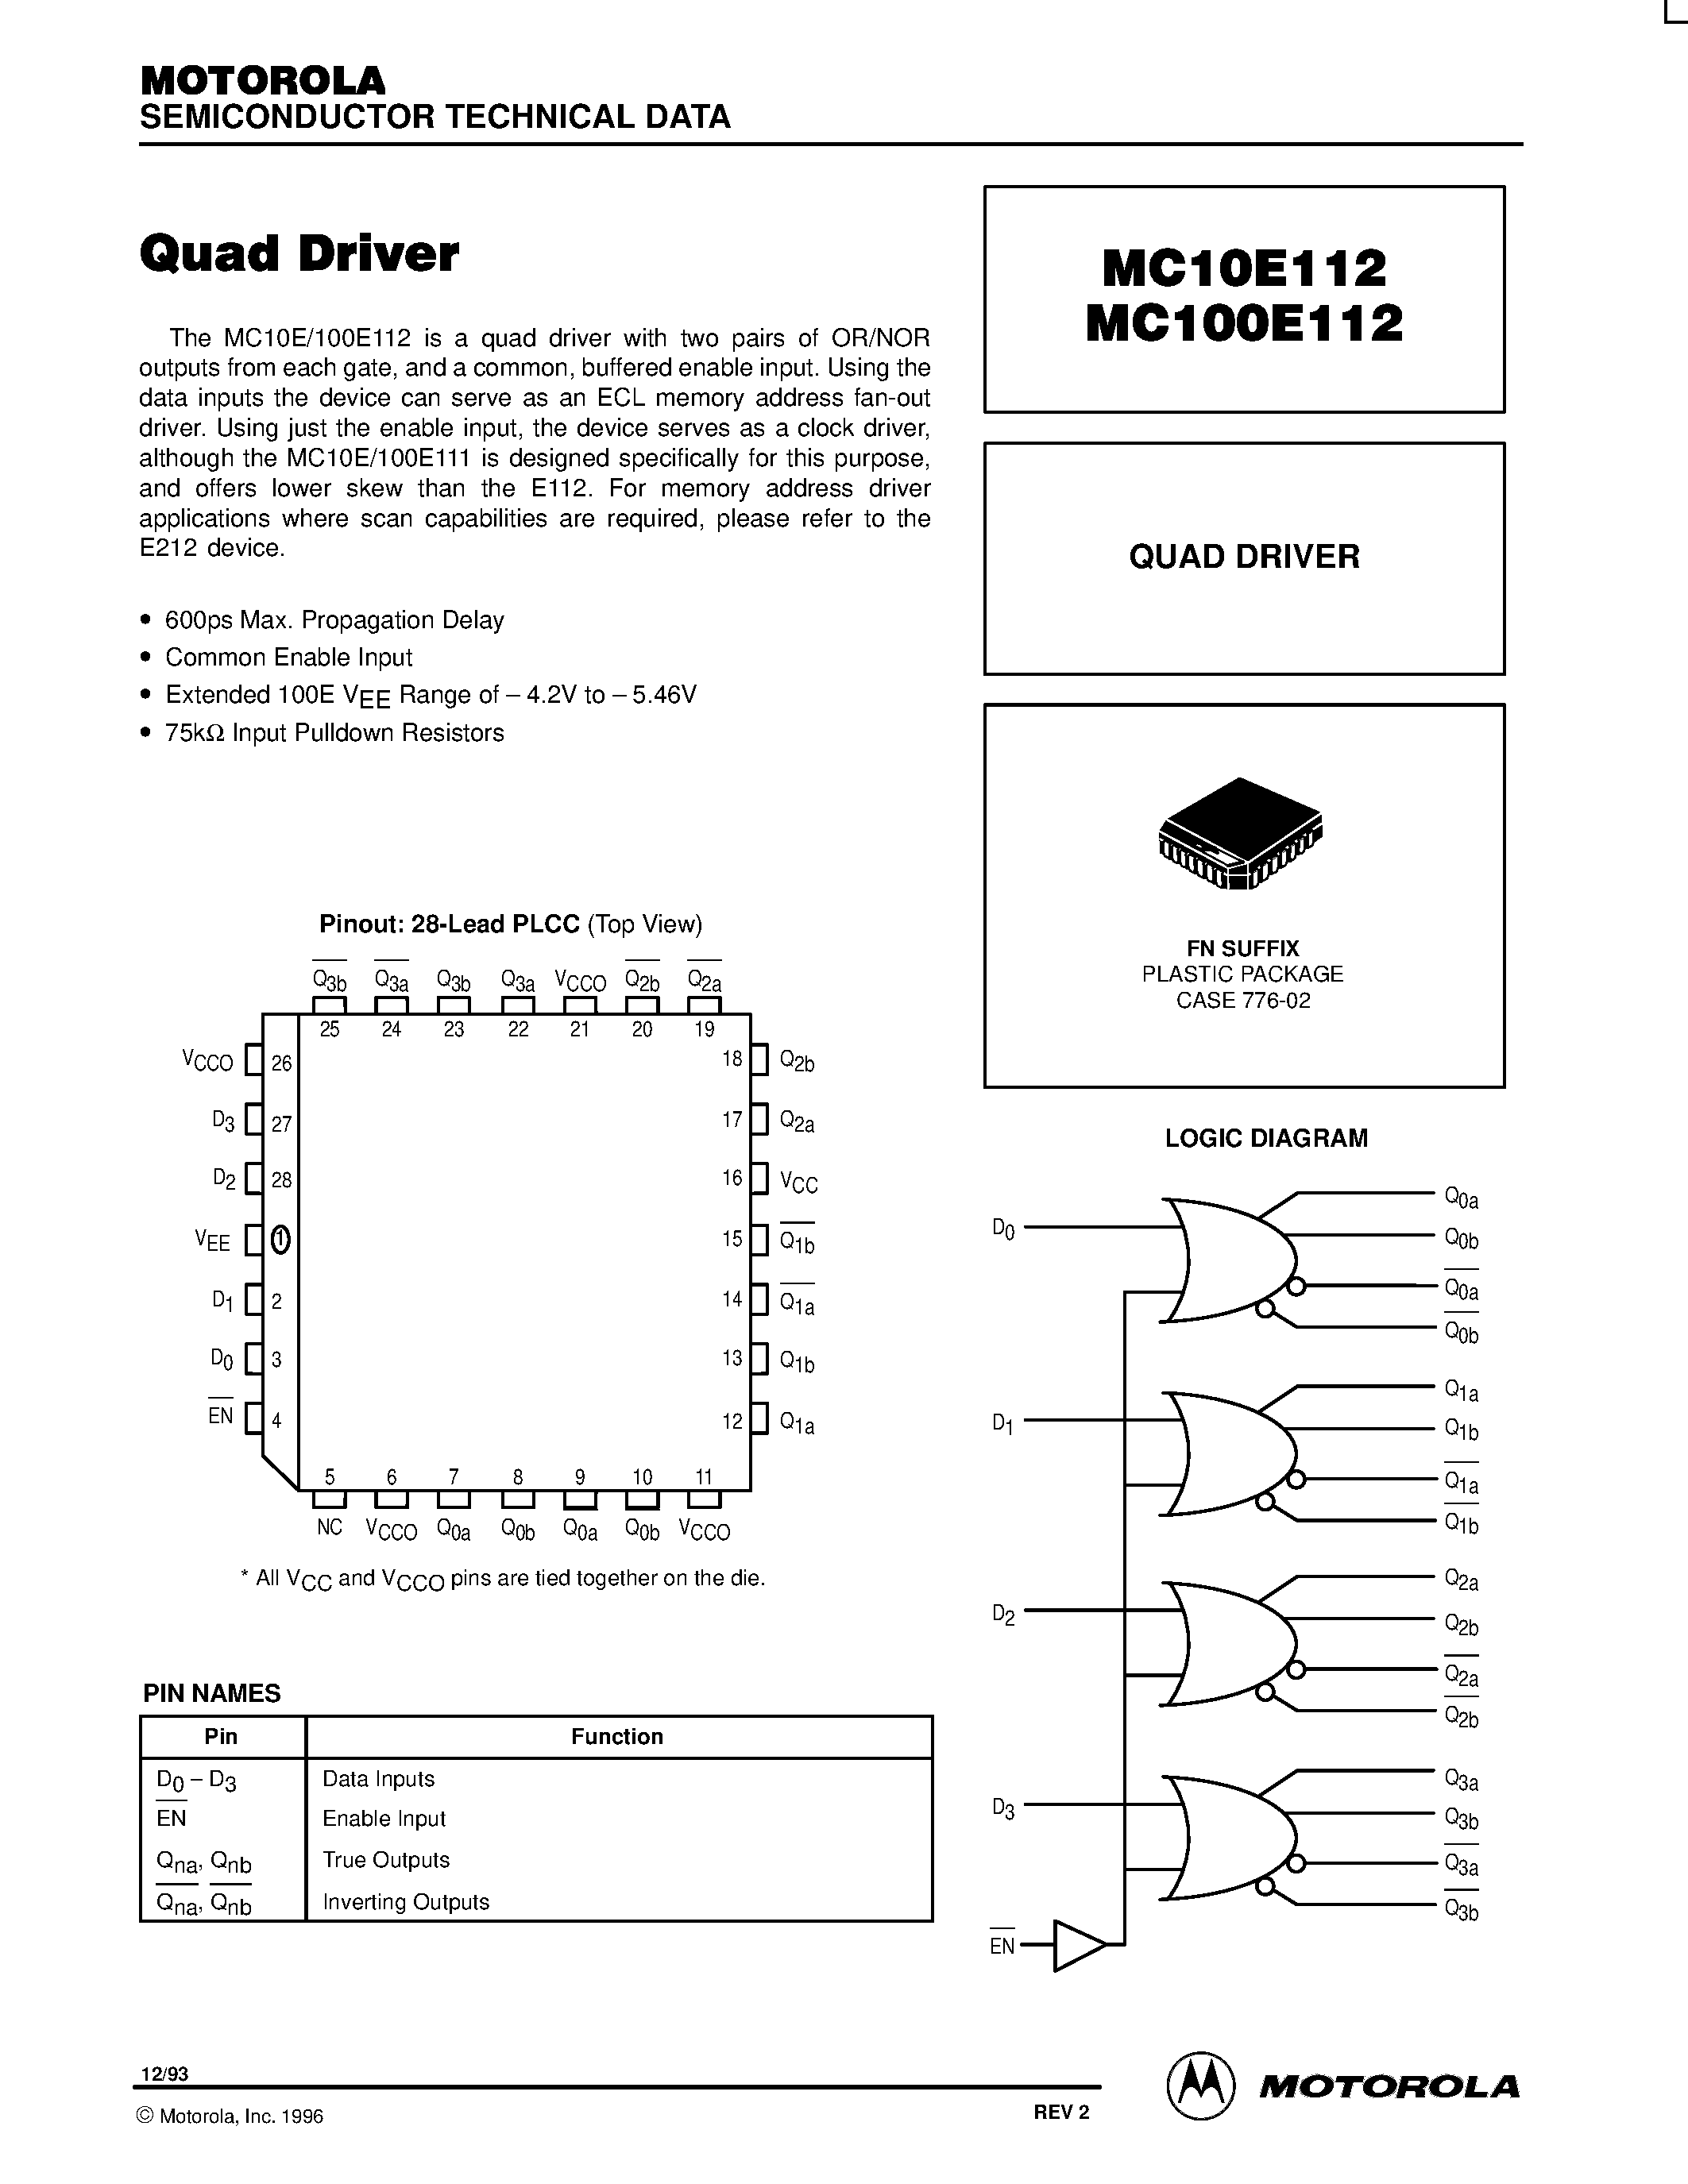 Datasheet MC100E112FN - QUAD DRIVER page 1